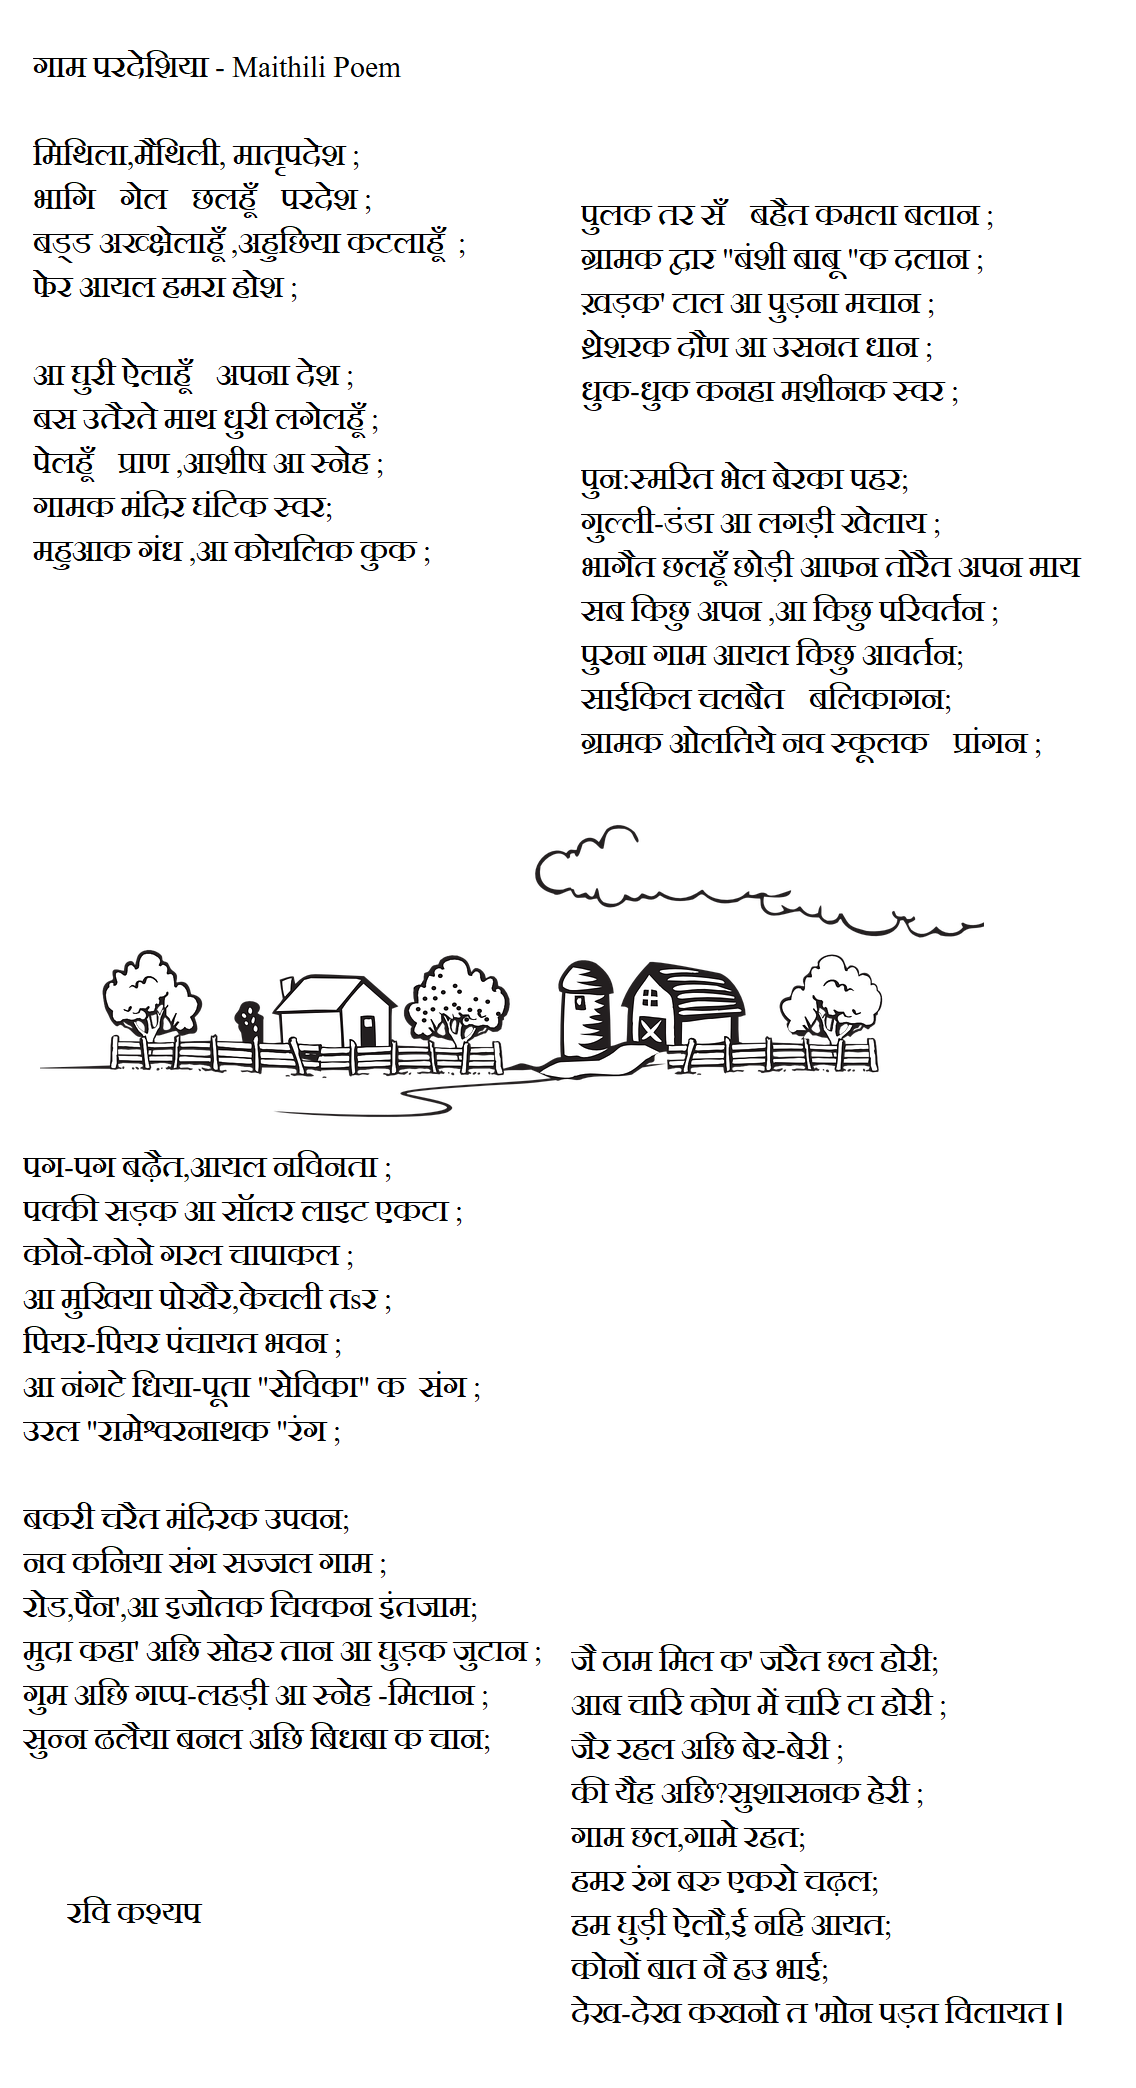 maithili_poem